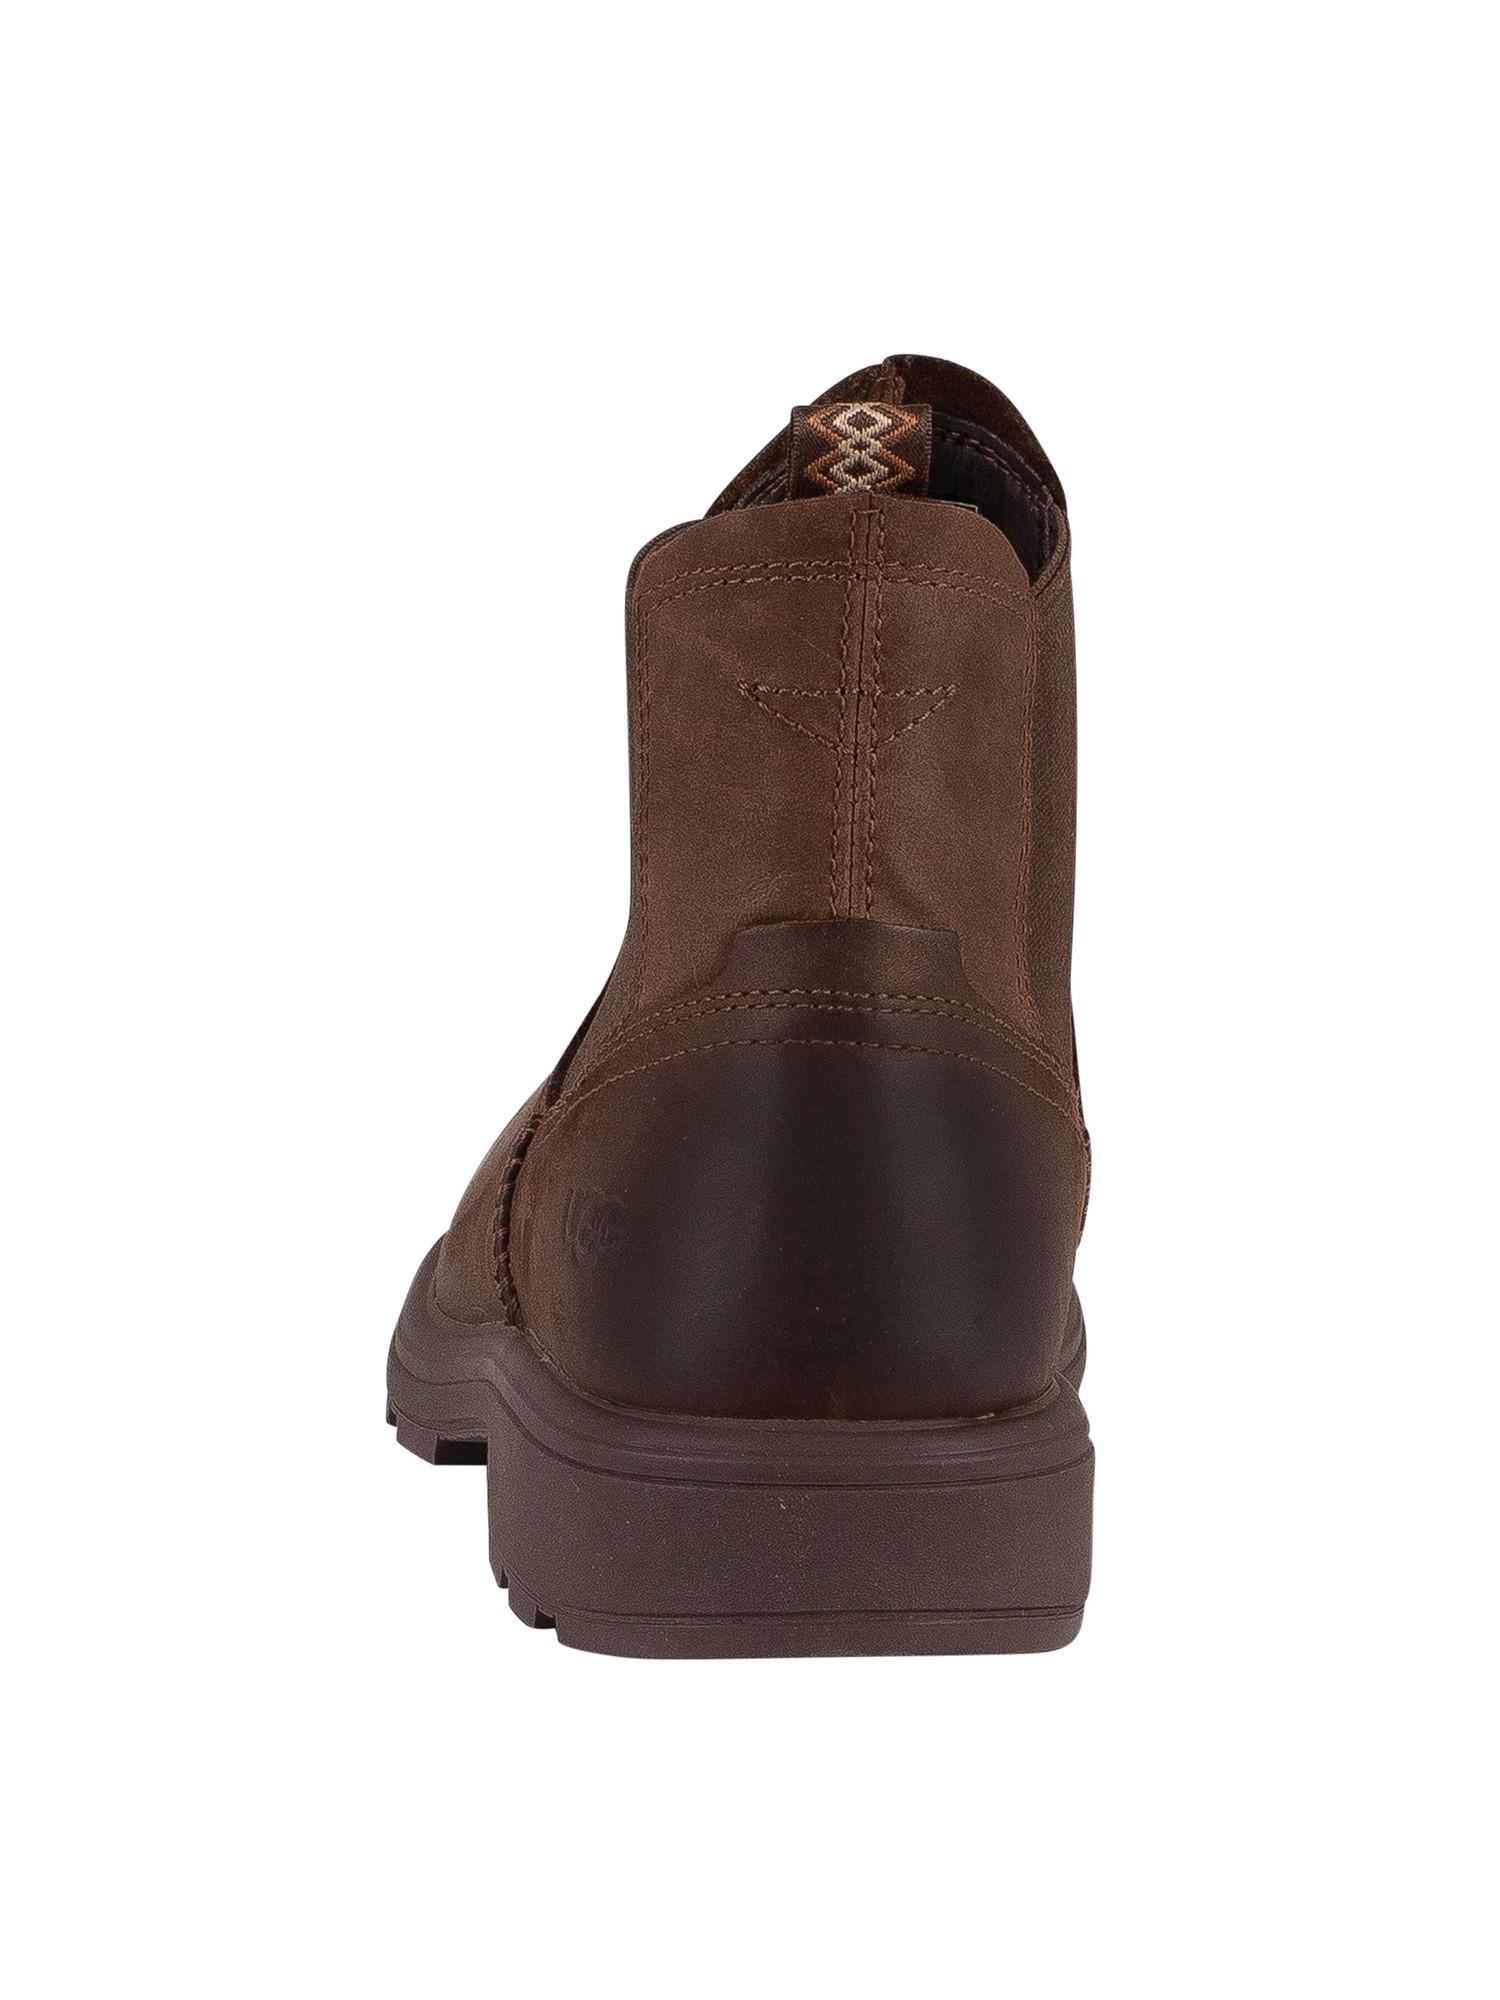 UGG Biltmore Chelsea Waterproof Winter Boots in Brown for Men - Save 60% -  Lyst